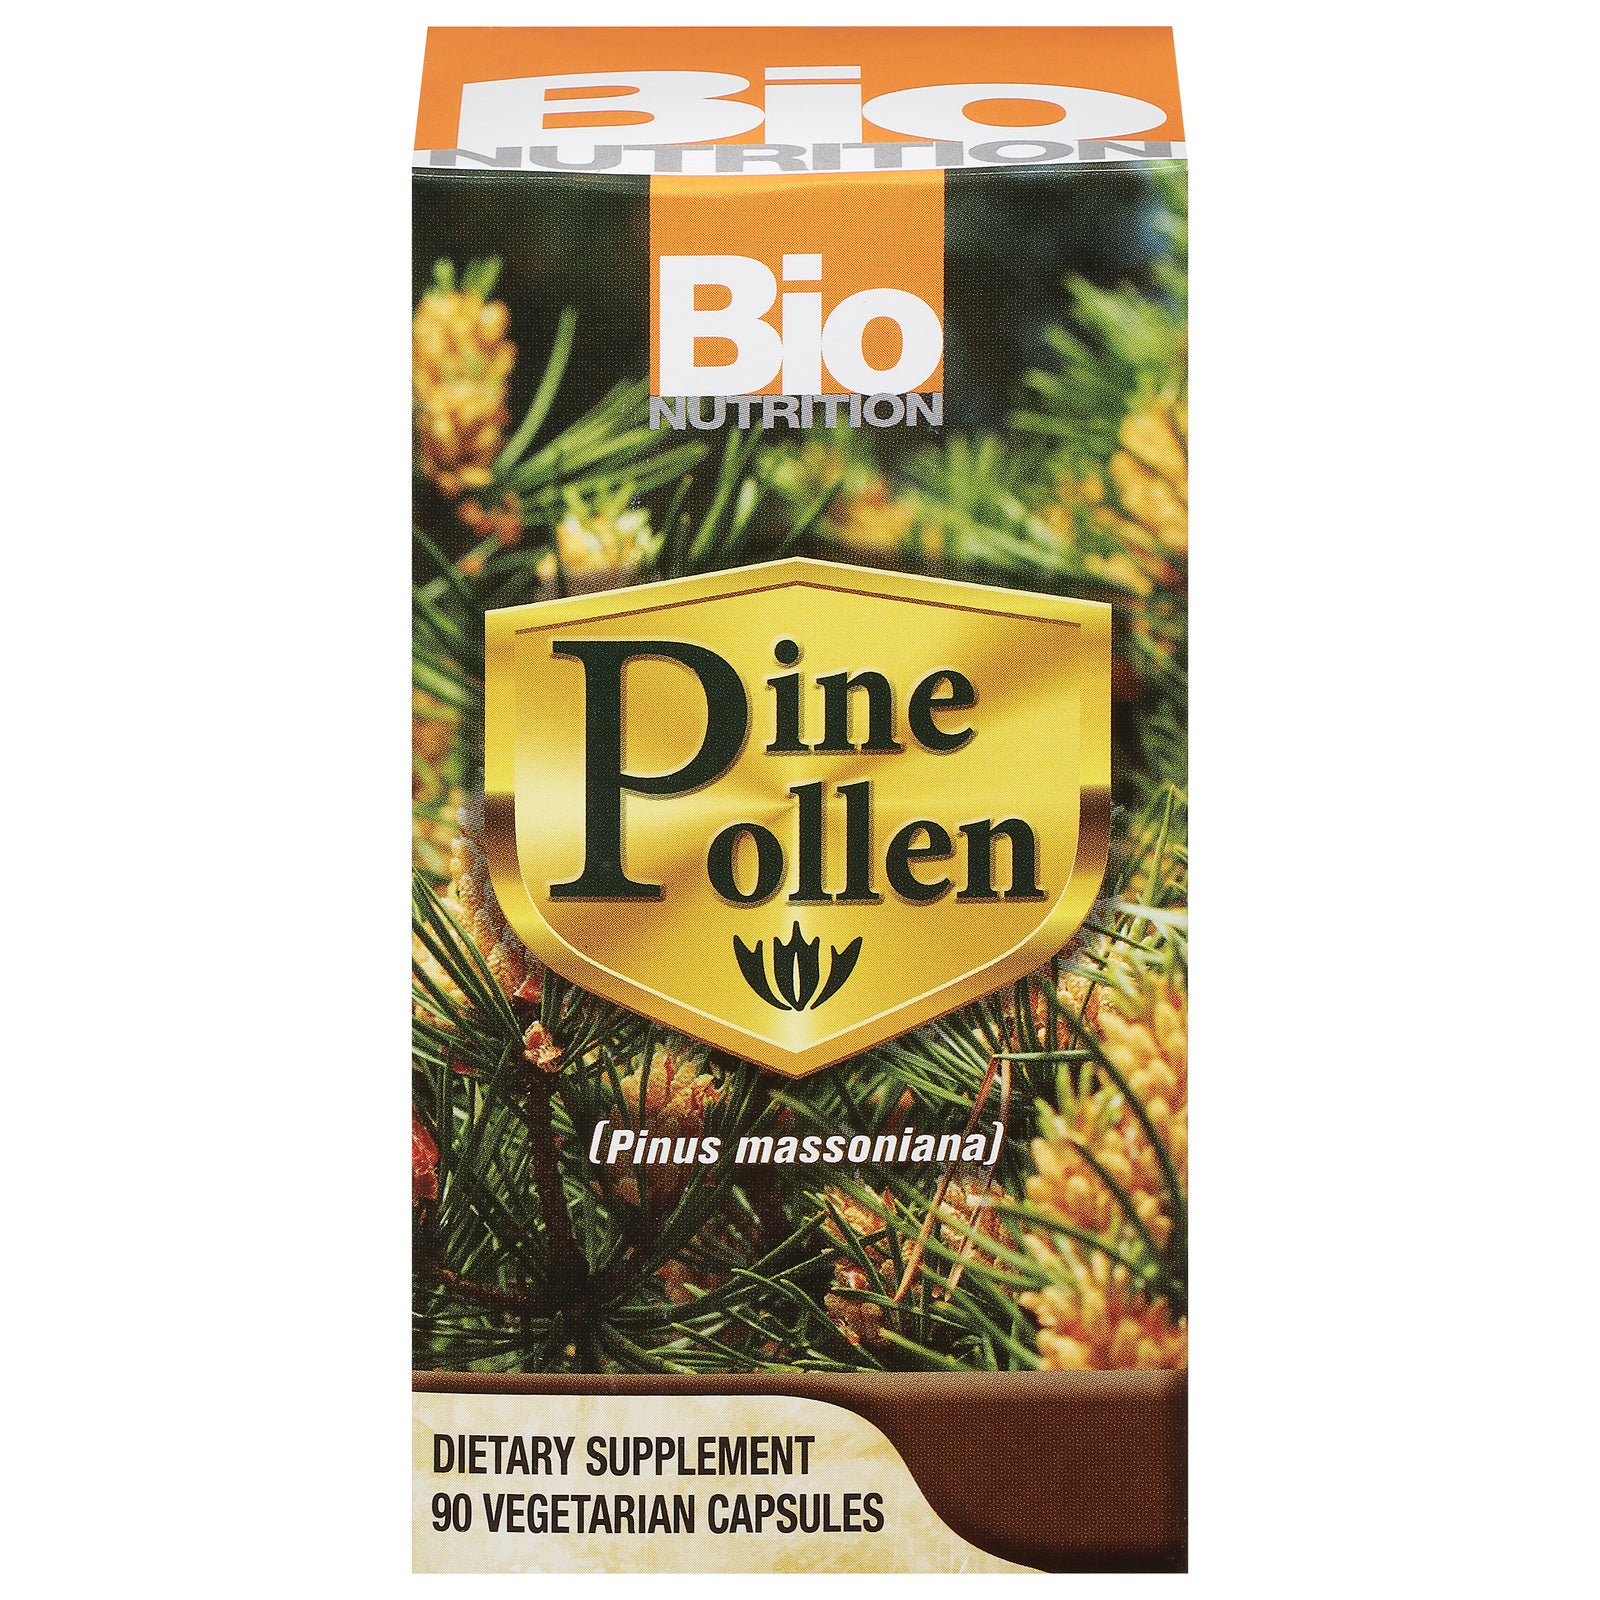 Bio Nutrition - Pine Pollen - 90 Vcap